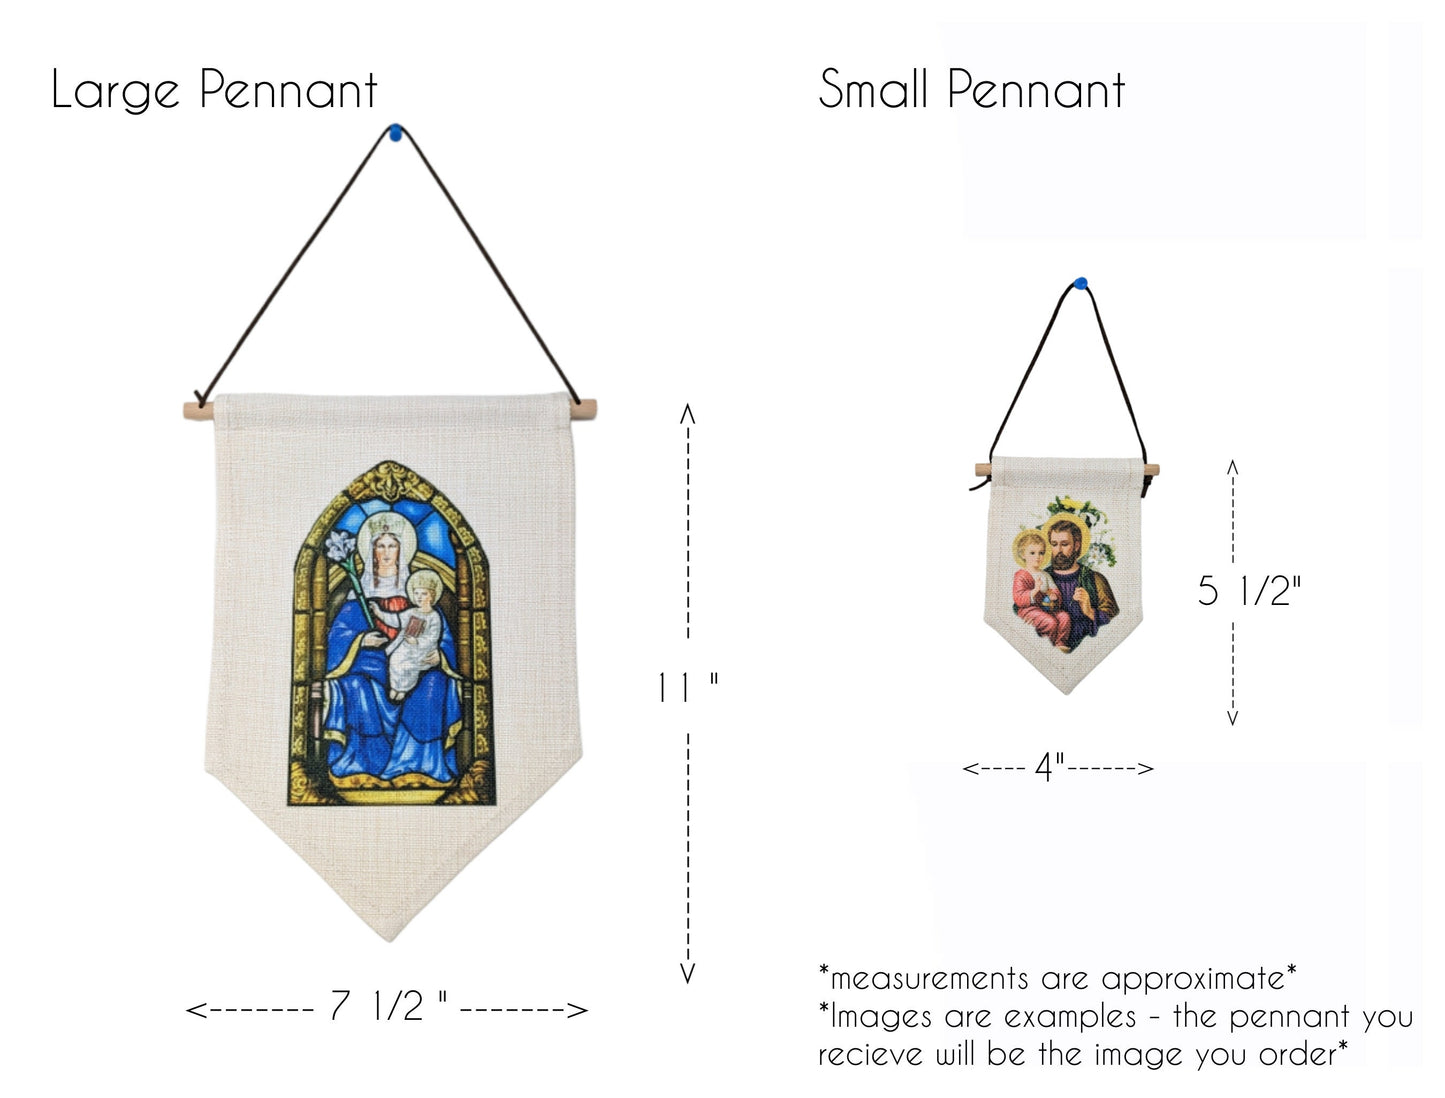 St George Pennant, Mini Banner, Catholic Religious Sacramental, Devotional, Pilgrimage, Patron Saint of England, St. George and the dragon